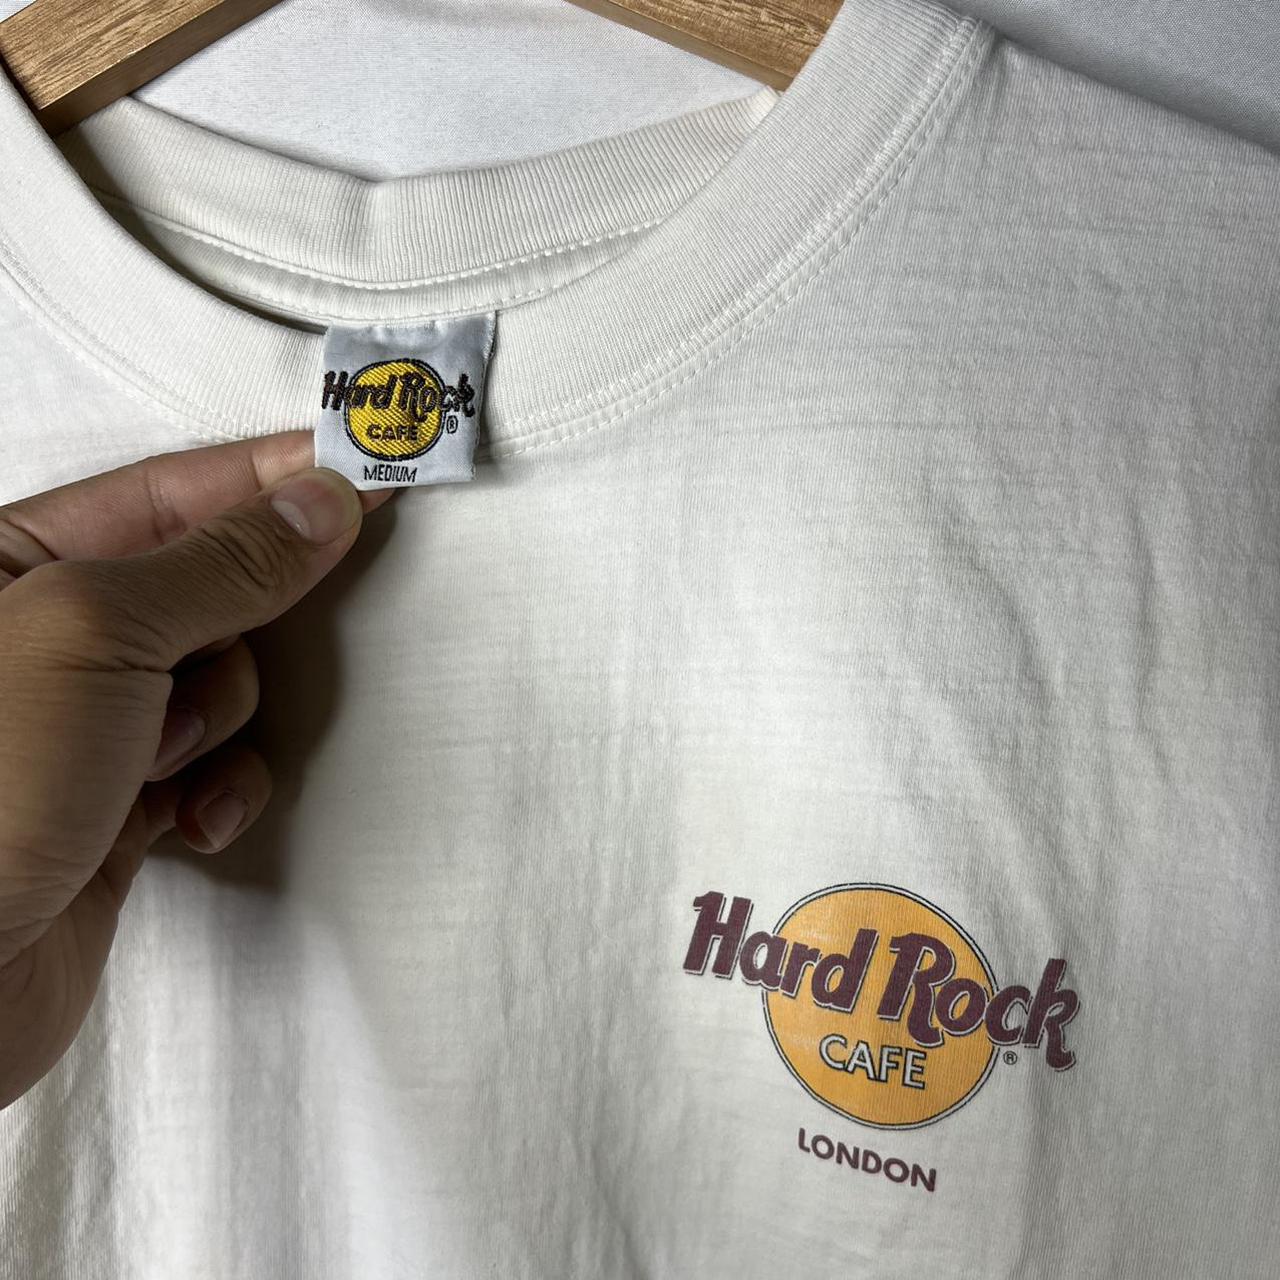 Product Image 4 - Hard Rock London T-Shirt

Size M.